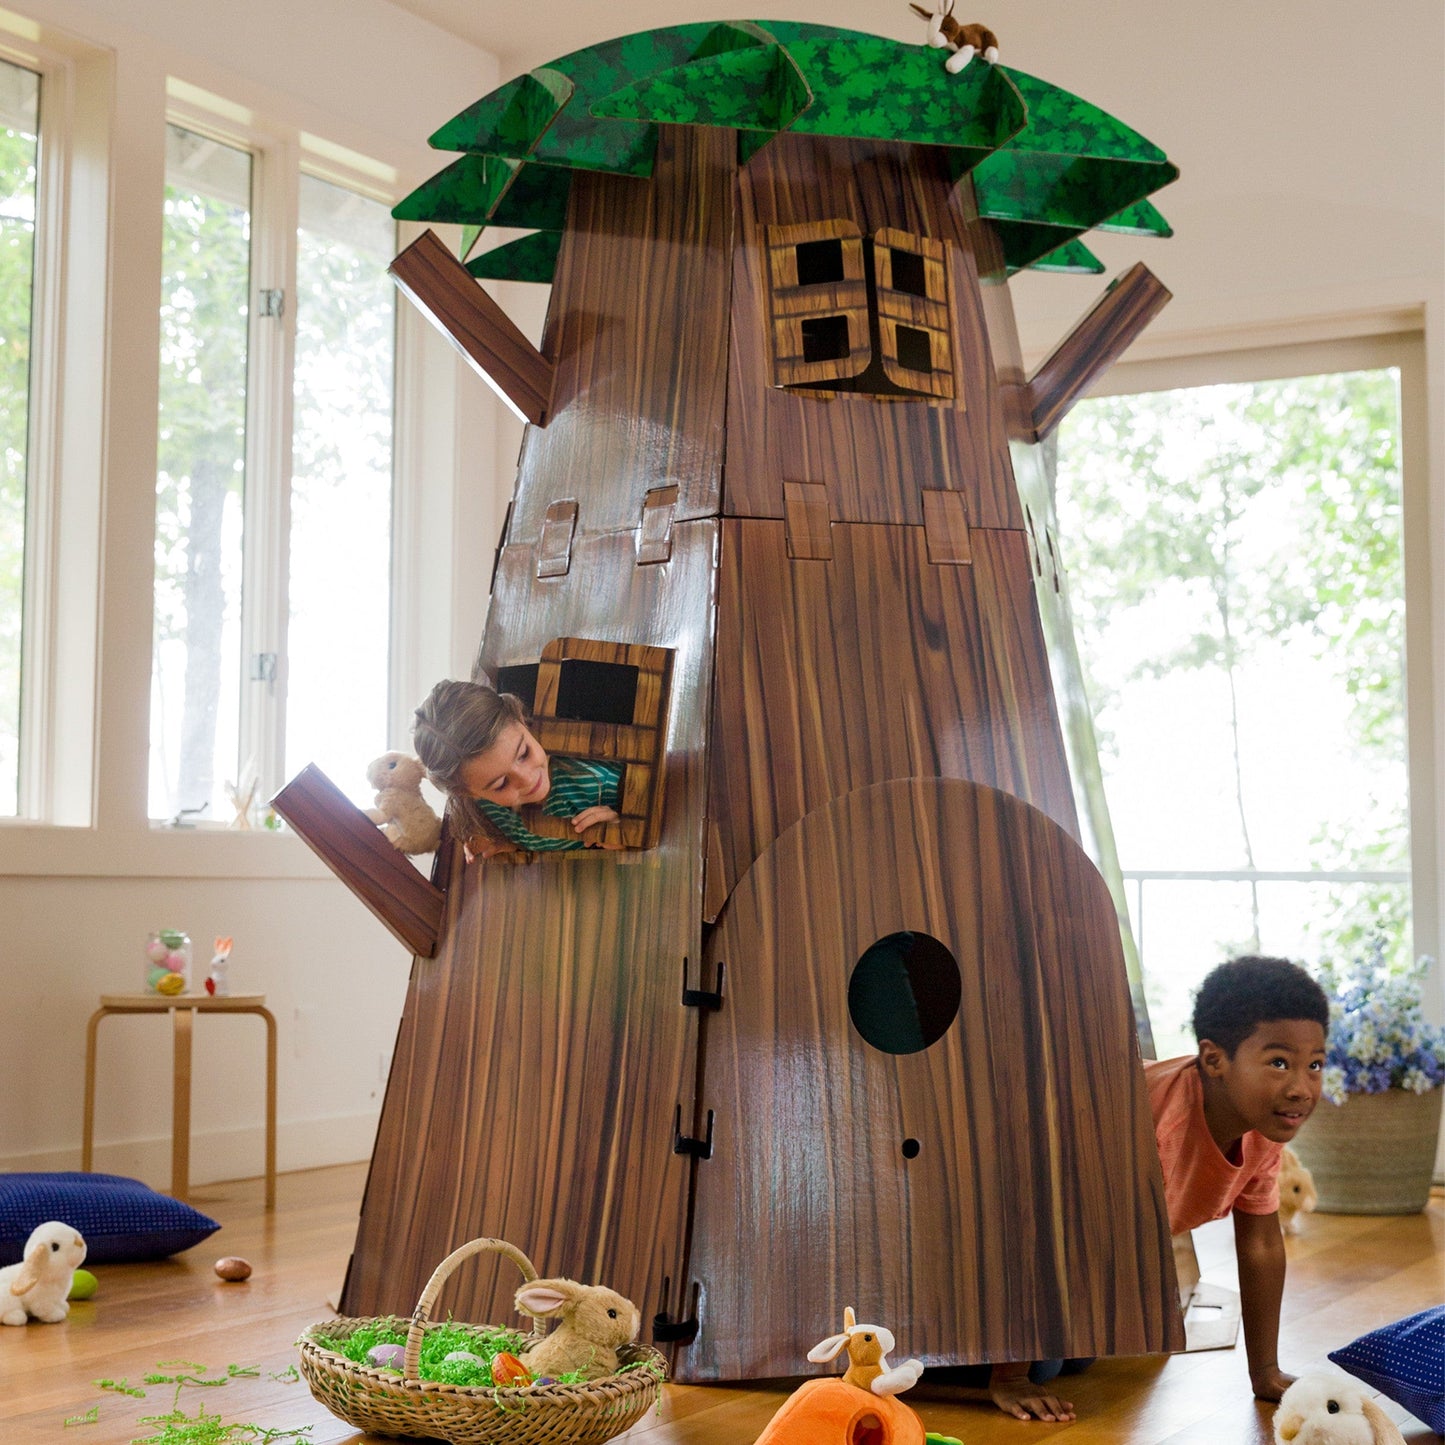 Constructagons Big Tree Fort Indoor Fort-Building Kit